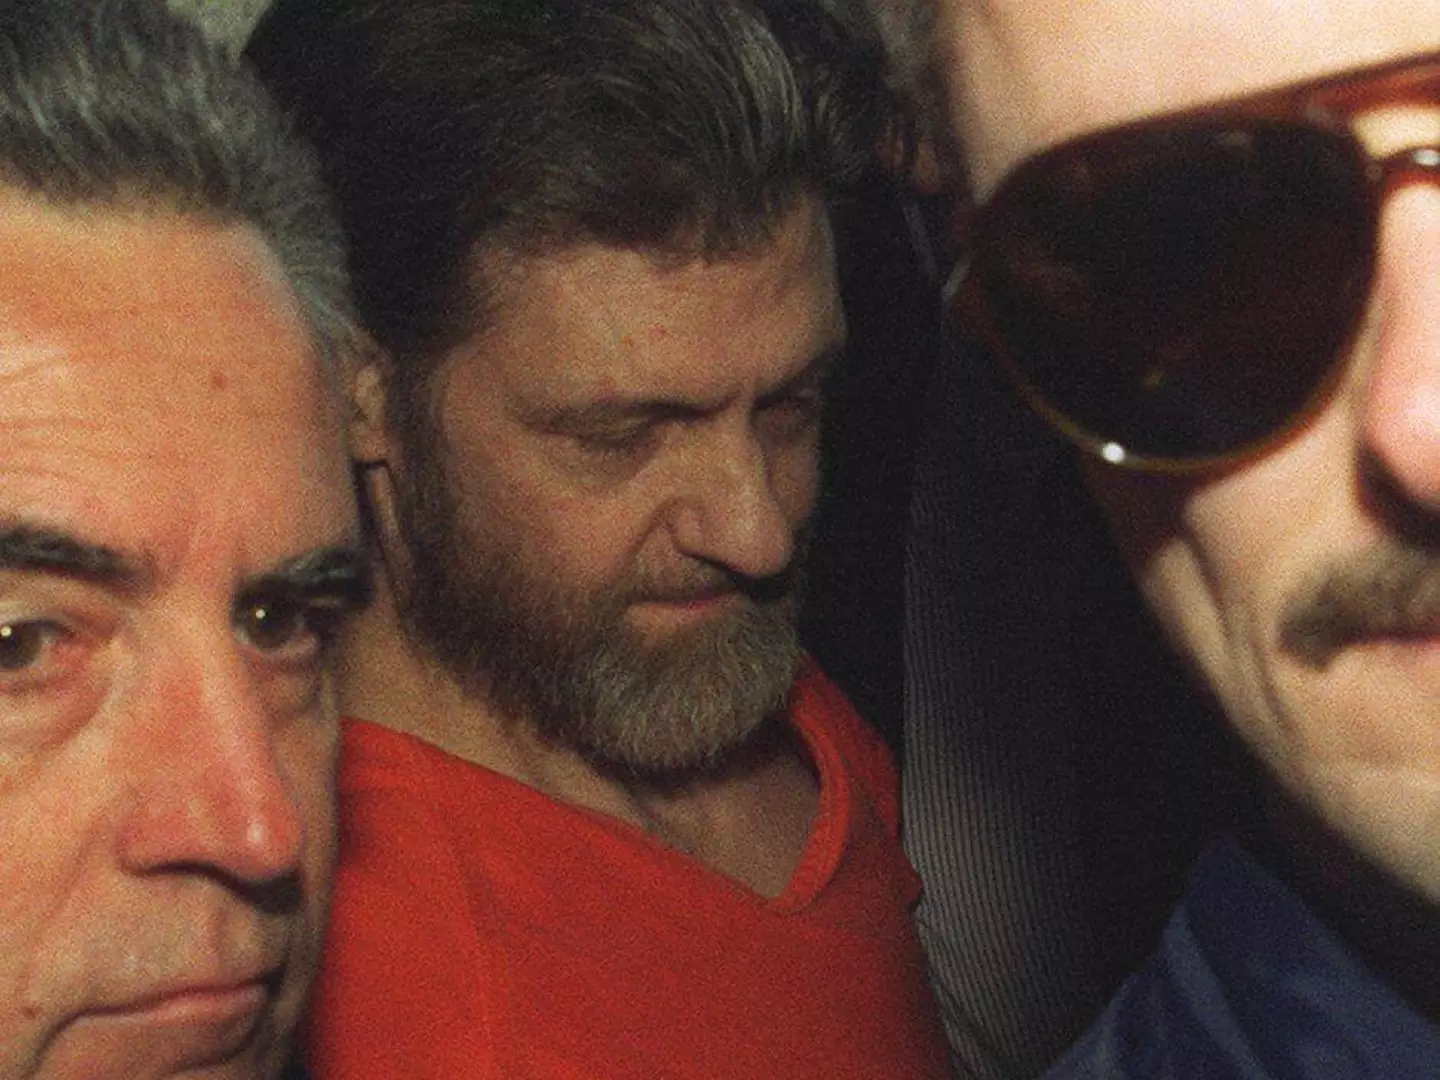 Ted Kaczynski was sentenced to life without parole.